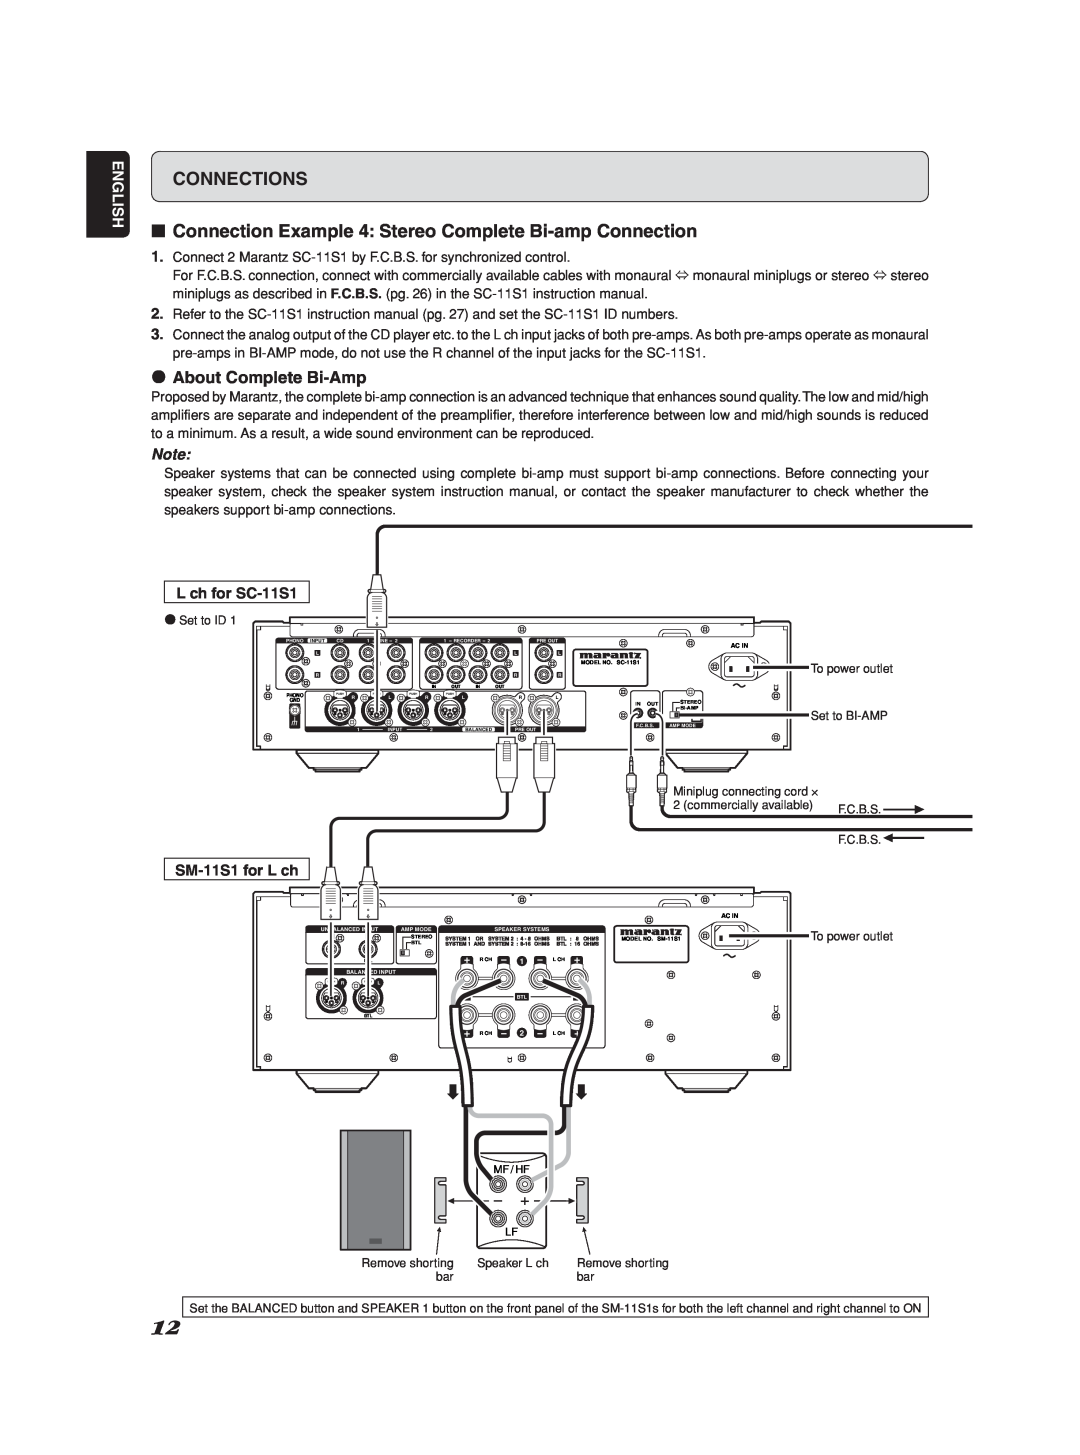 Marantz SM-1151 manual ¶About Complete Bi-Amp, Connections, English 